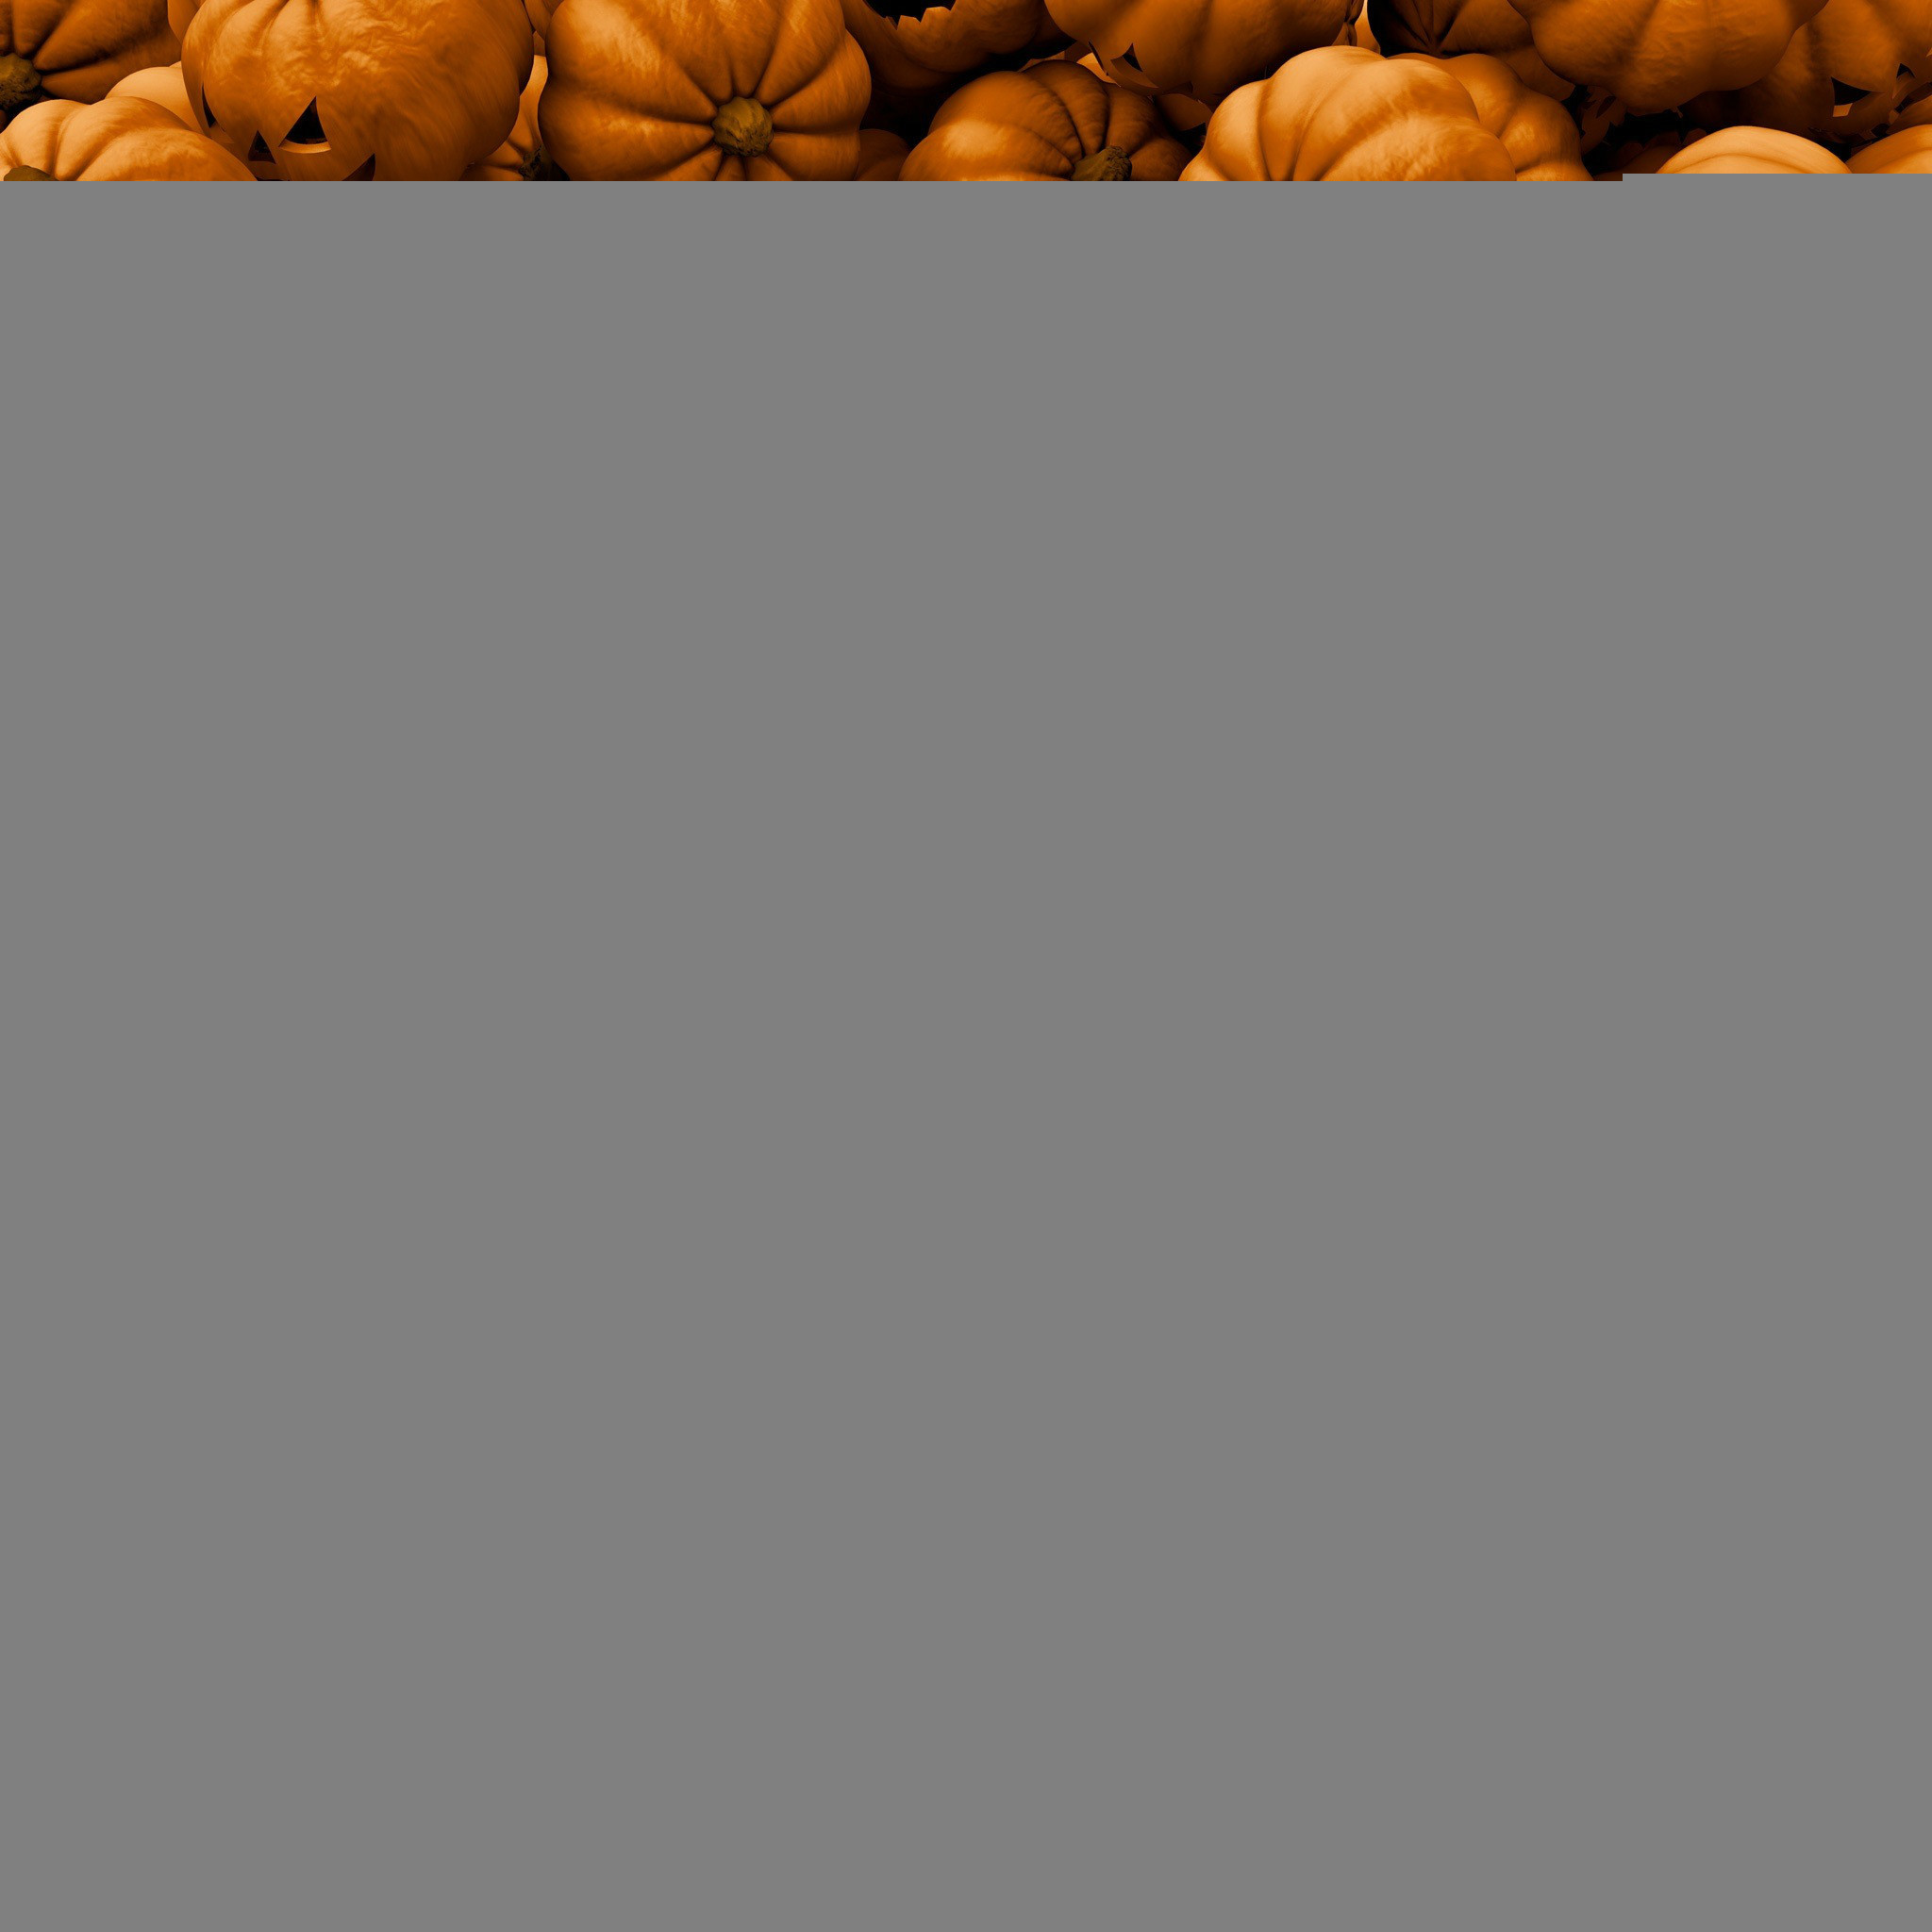 1073 0 Halloween Pumpkins iPad wallpaper